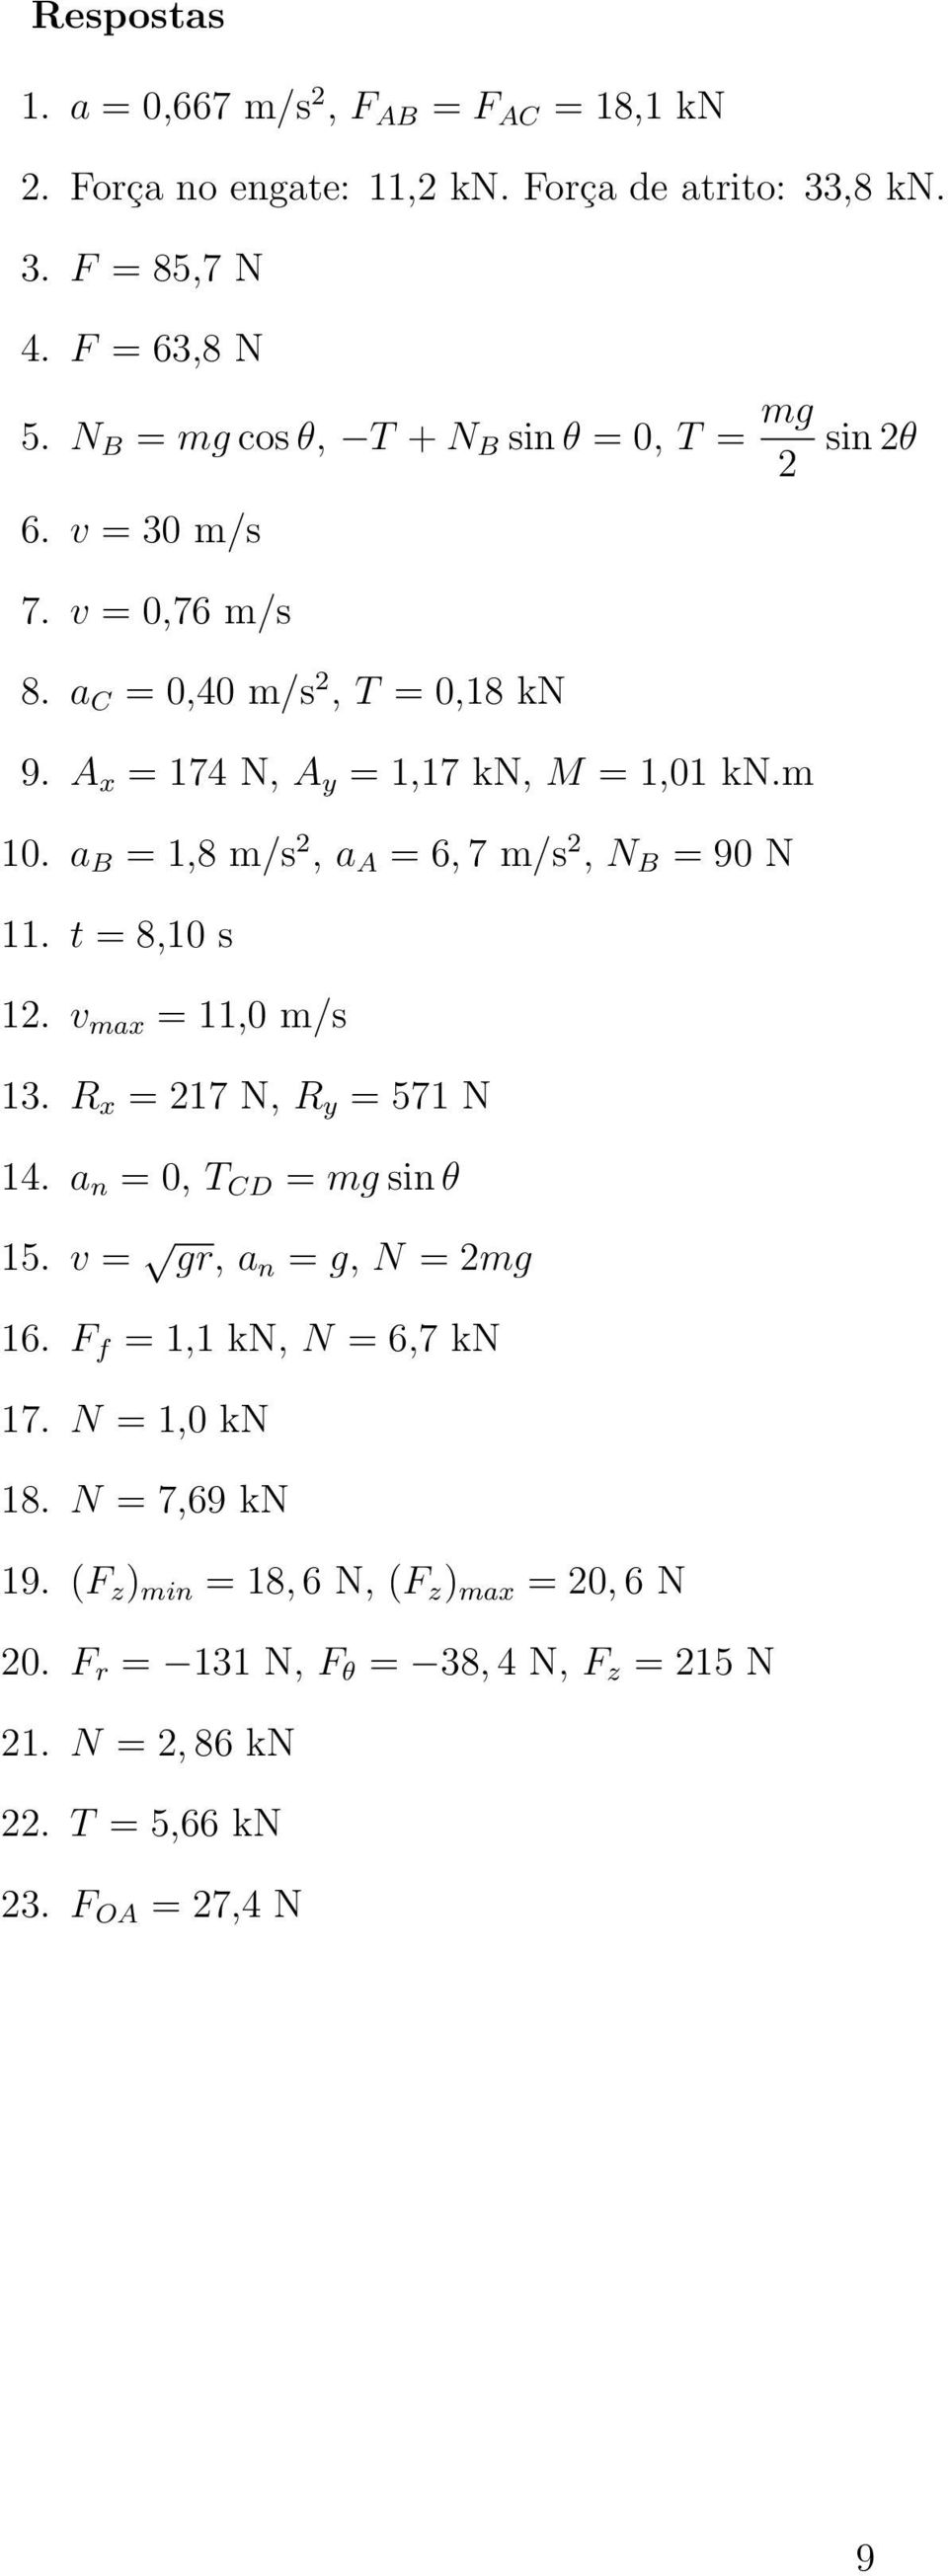 a B = 1,8 m/s 2, a A = 6, 7 m/s 2, N B = 90 N 11. t = 8,10 s 12. v max = 11,0 m/s 13. R x = 217 N, R y = 571 N 14. a n = 0, T CD = mg sin θ 15.